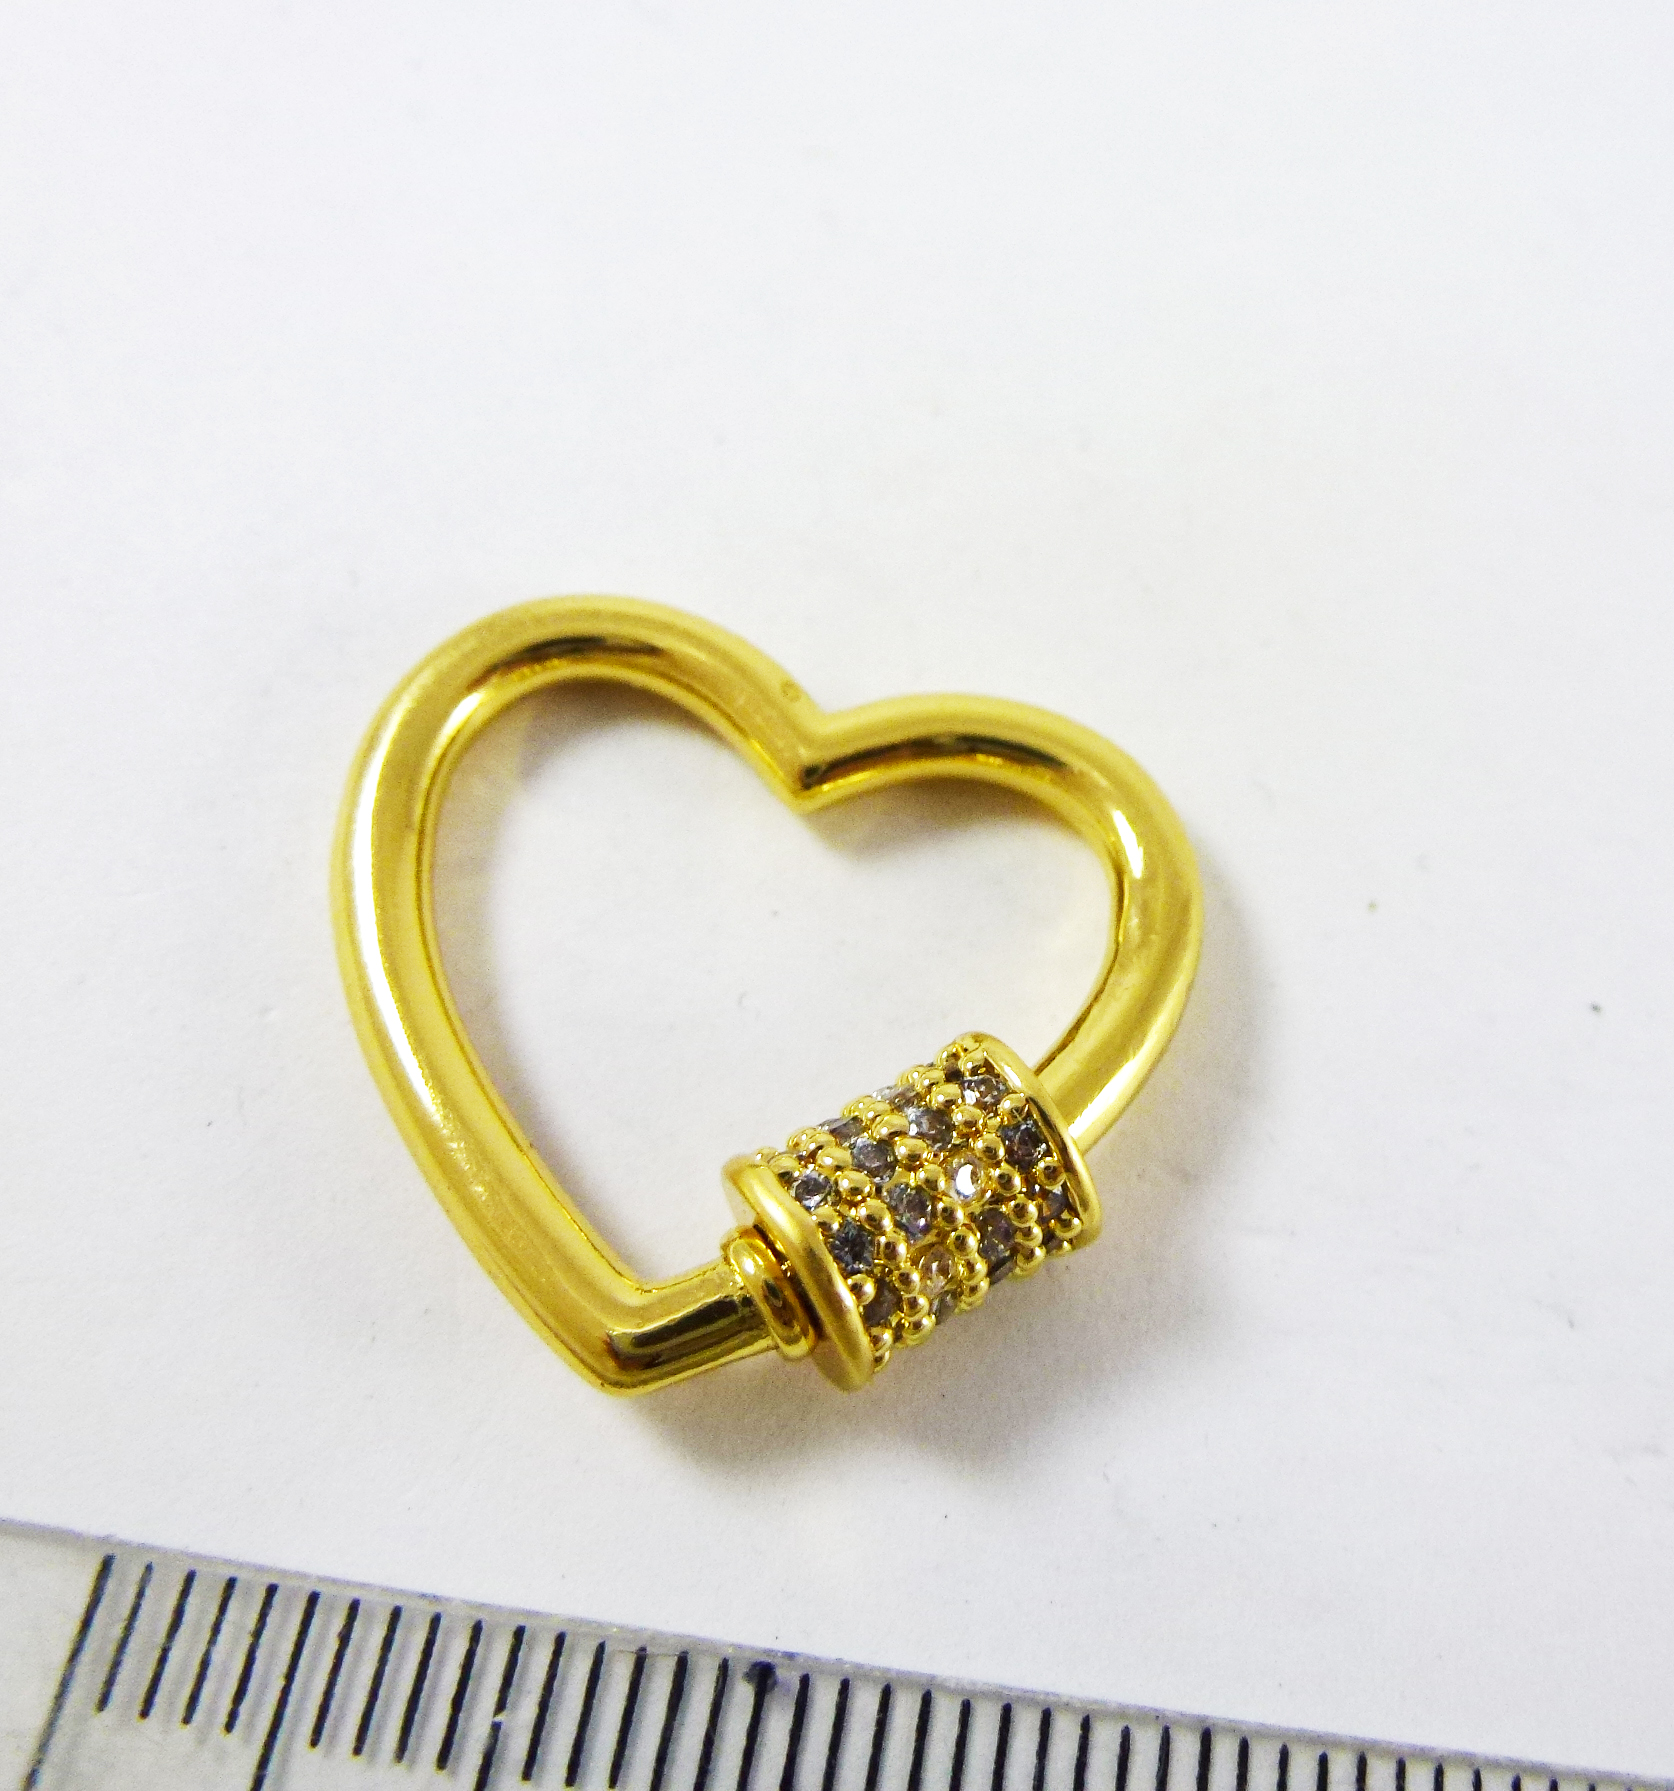 25mm銅鍍金色螺旋鑲鑽心形扣